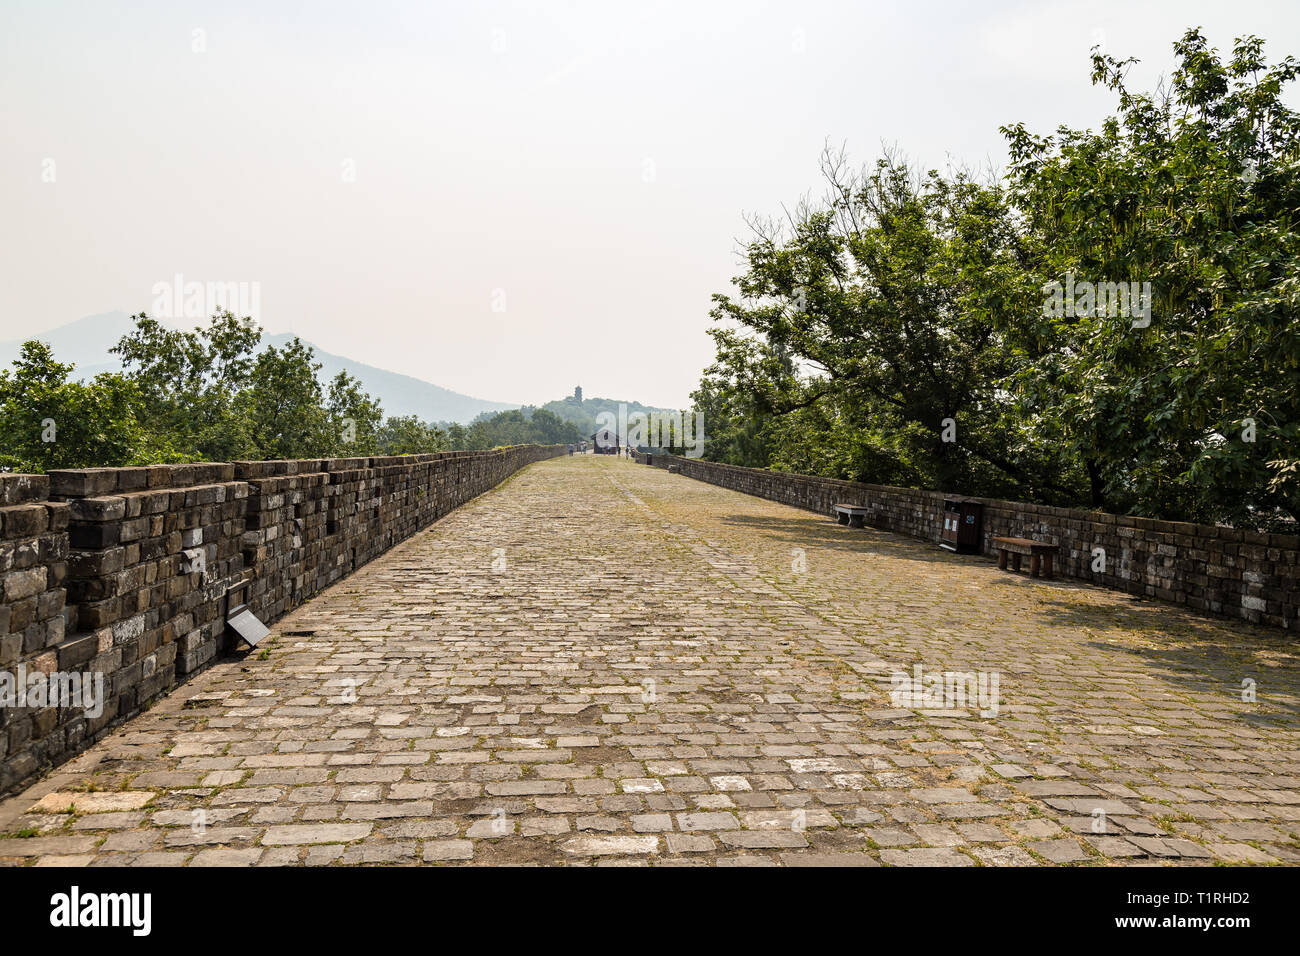 Mai 2017 - Nanjing, Jiangsu, China - ein Teil der alten Stadtmauer in der Nähe der Ming Dynastie Jiming Tempel. Zijin Berg ist weit sichtbar. Nanjing hat Stockfoto